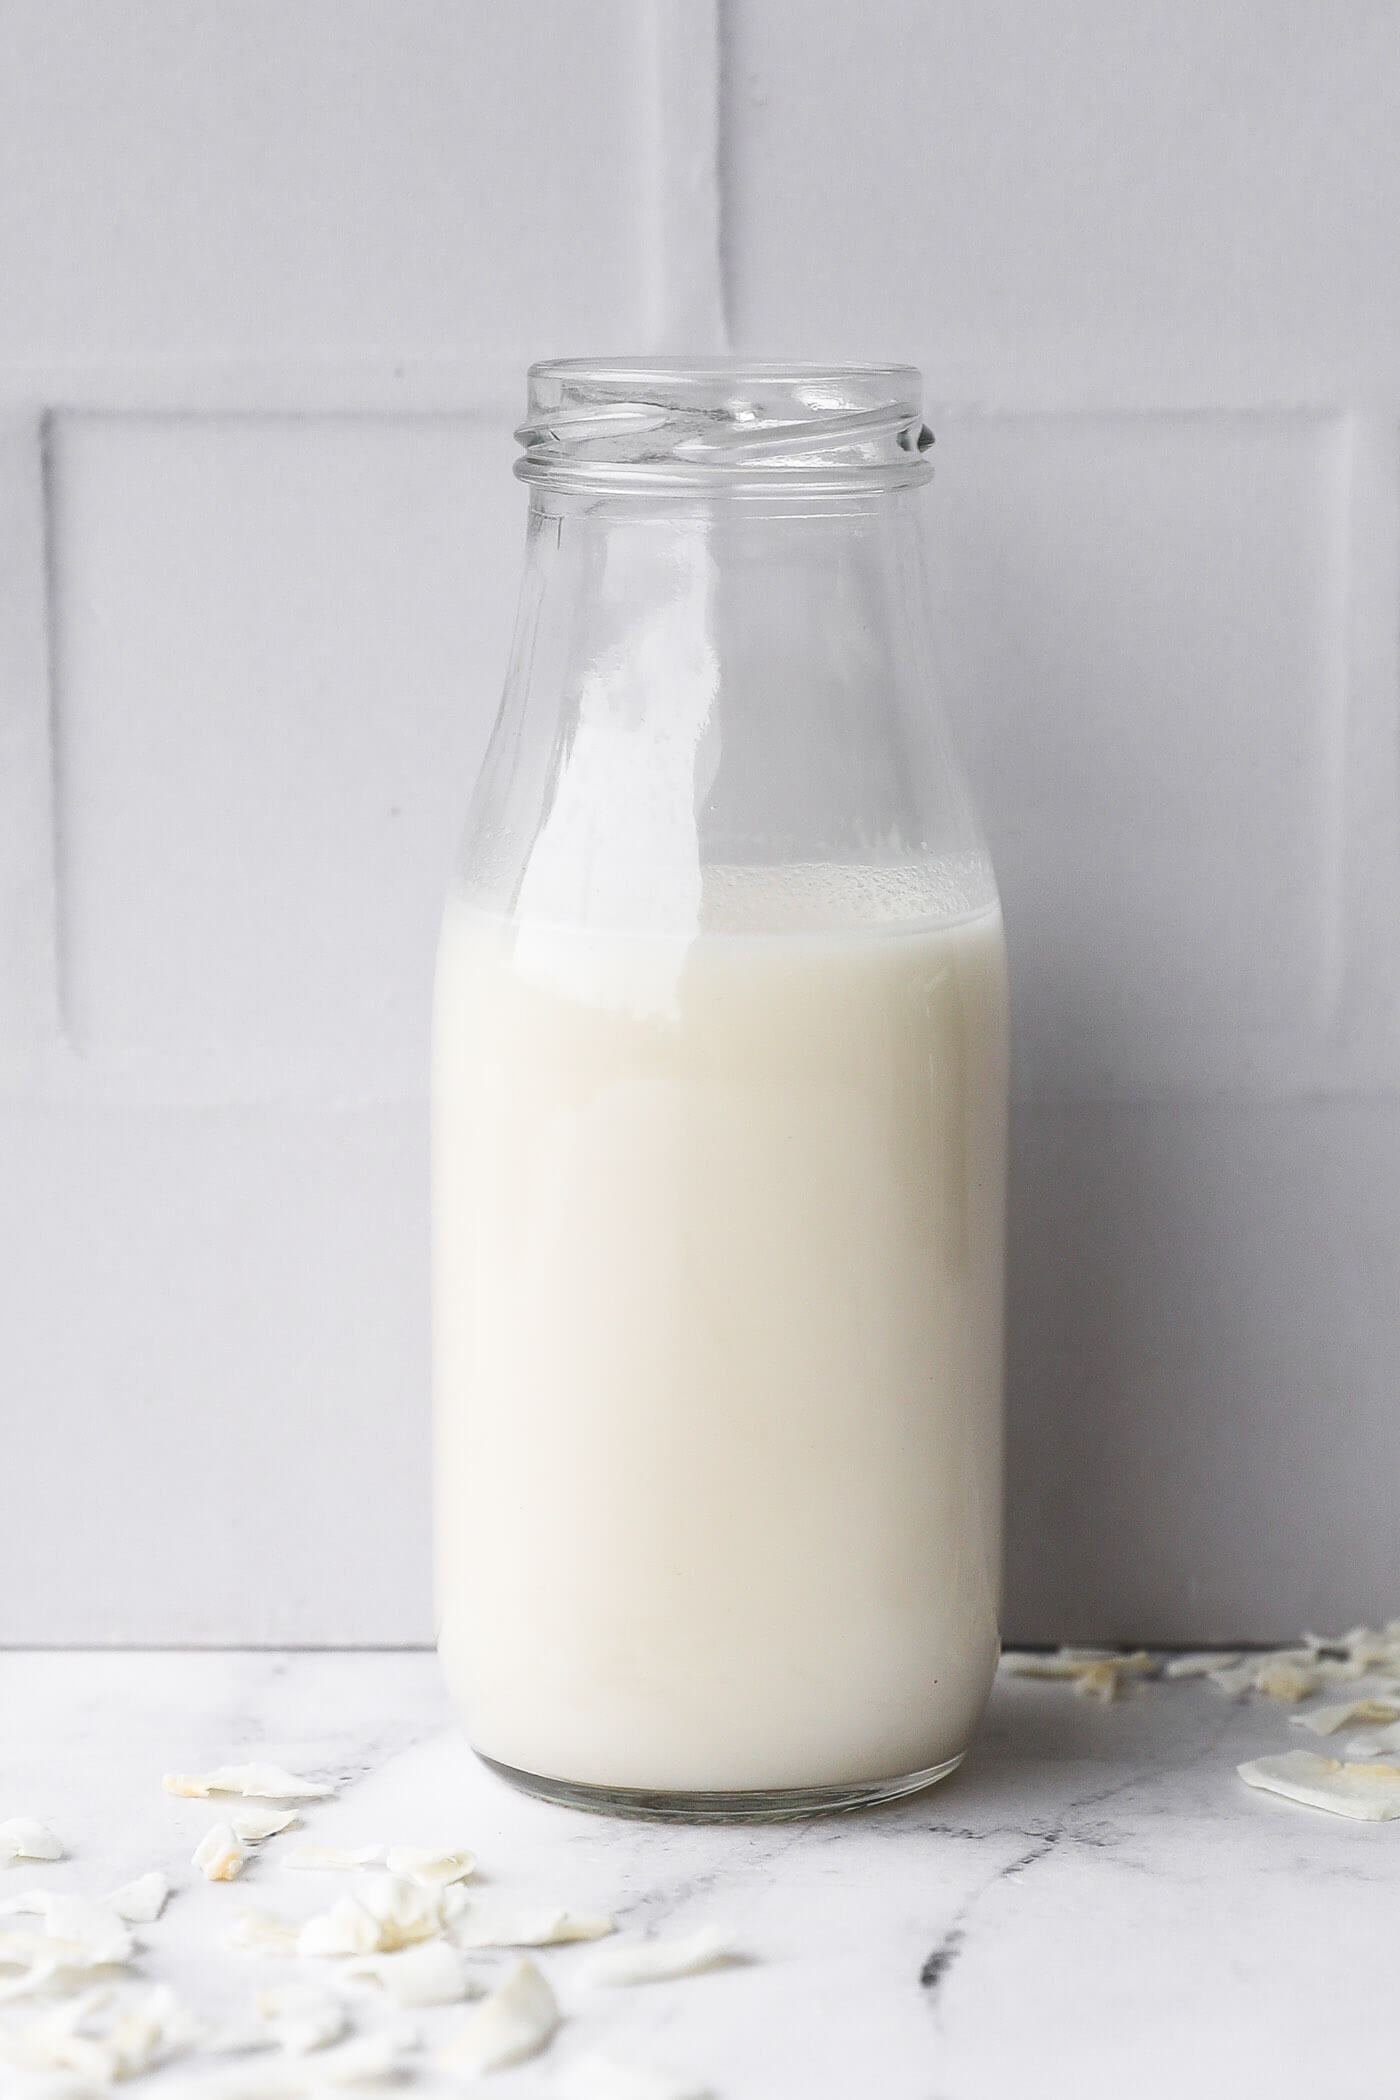 https://realsimplegood.com/wp-content/uploads/How-to-Make-Coconut-Milk-Just-2-Ingredients-17-1.jpg